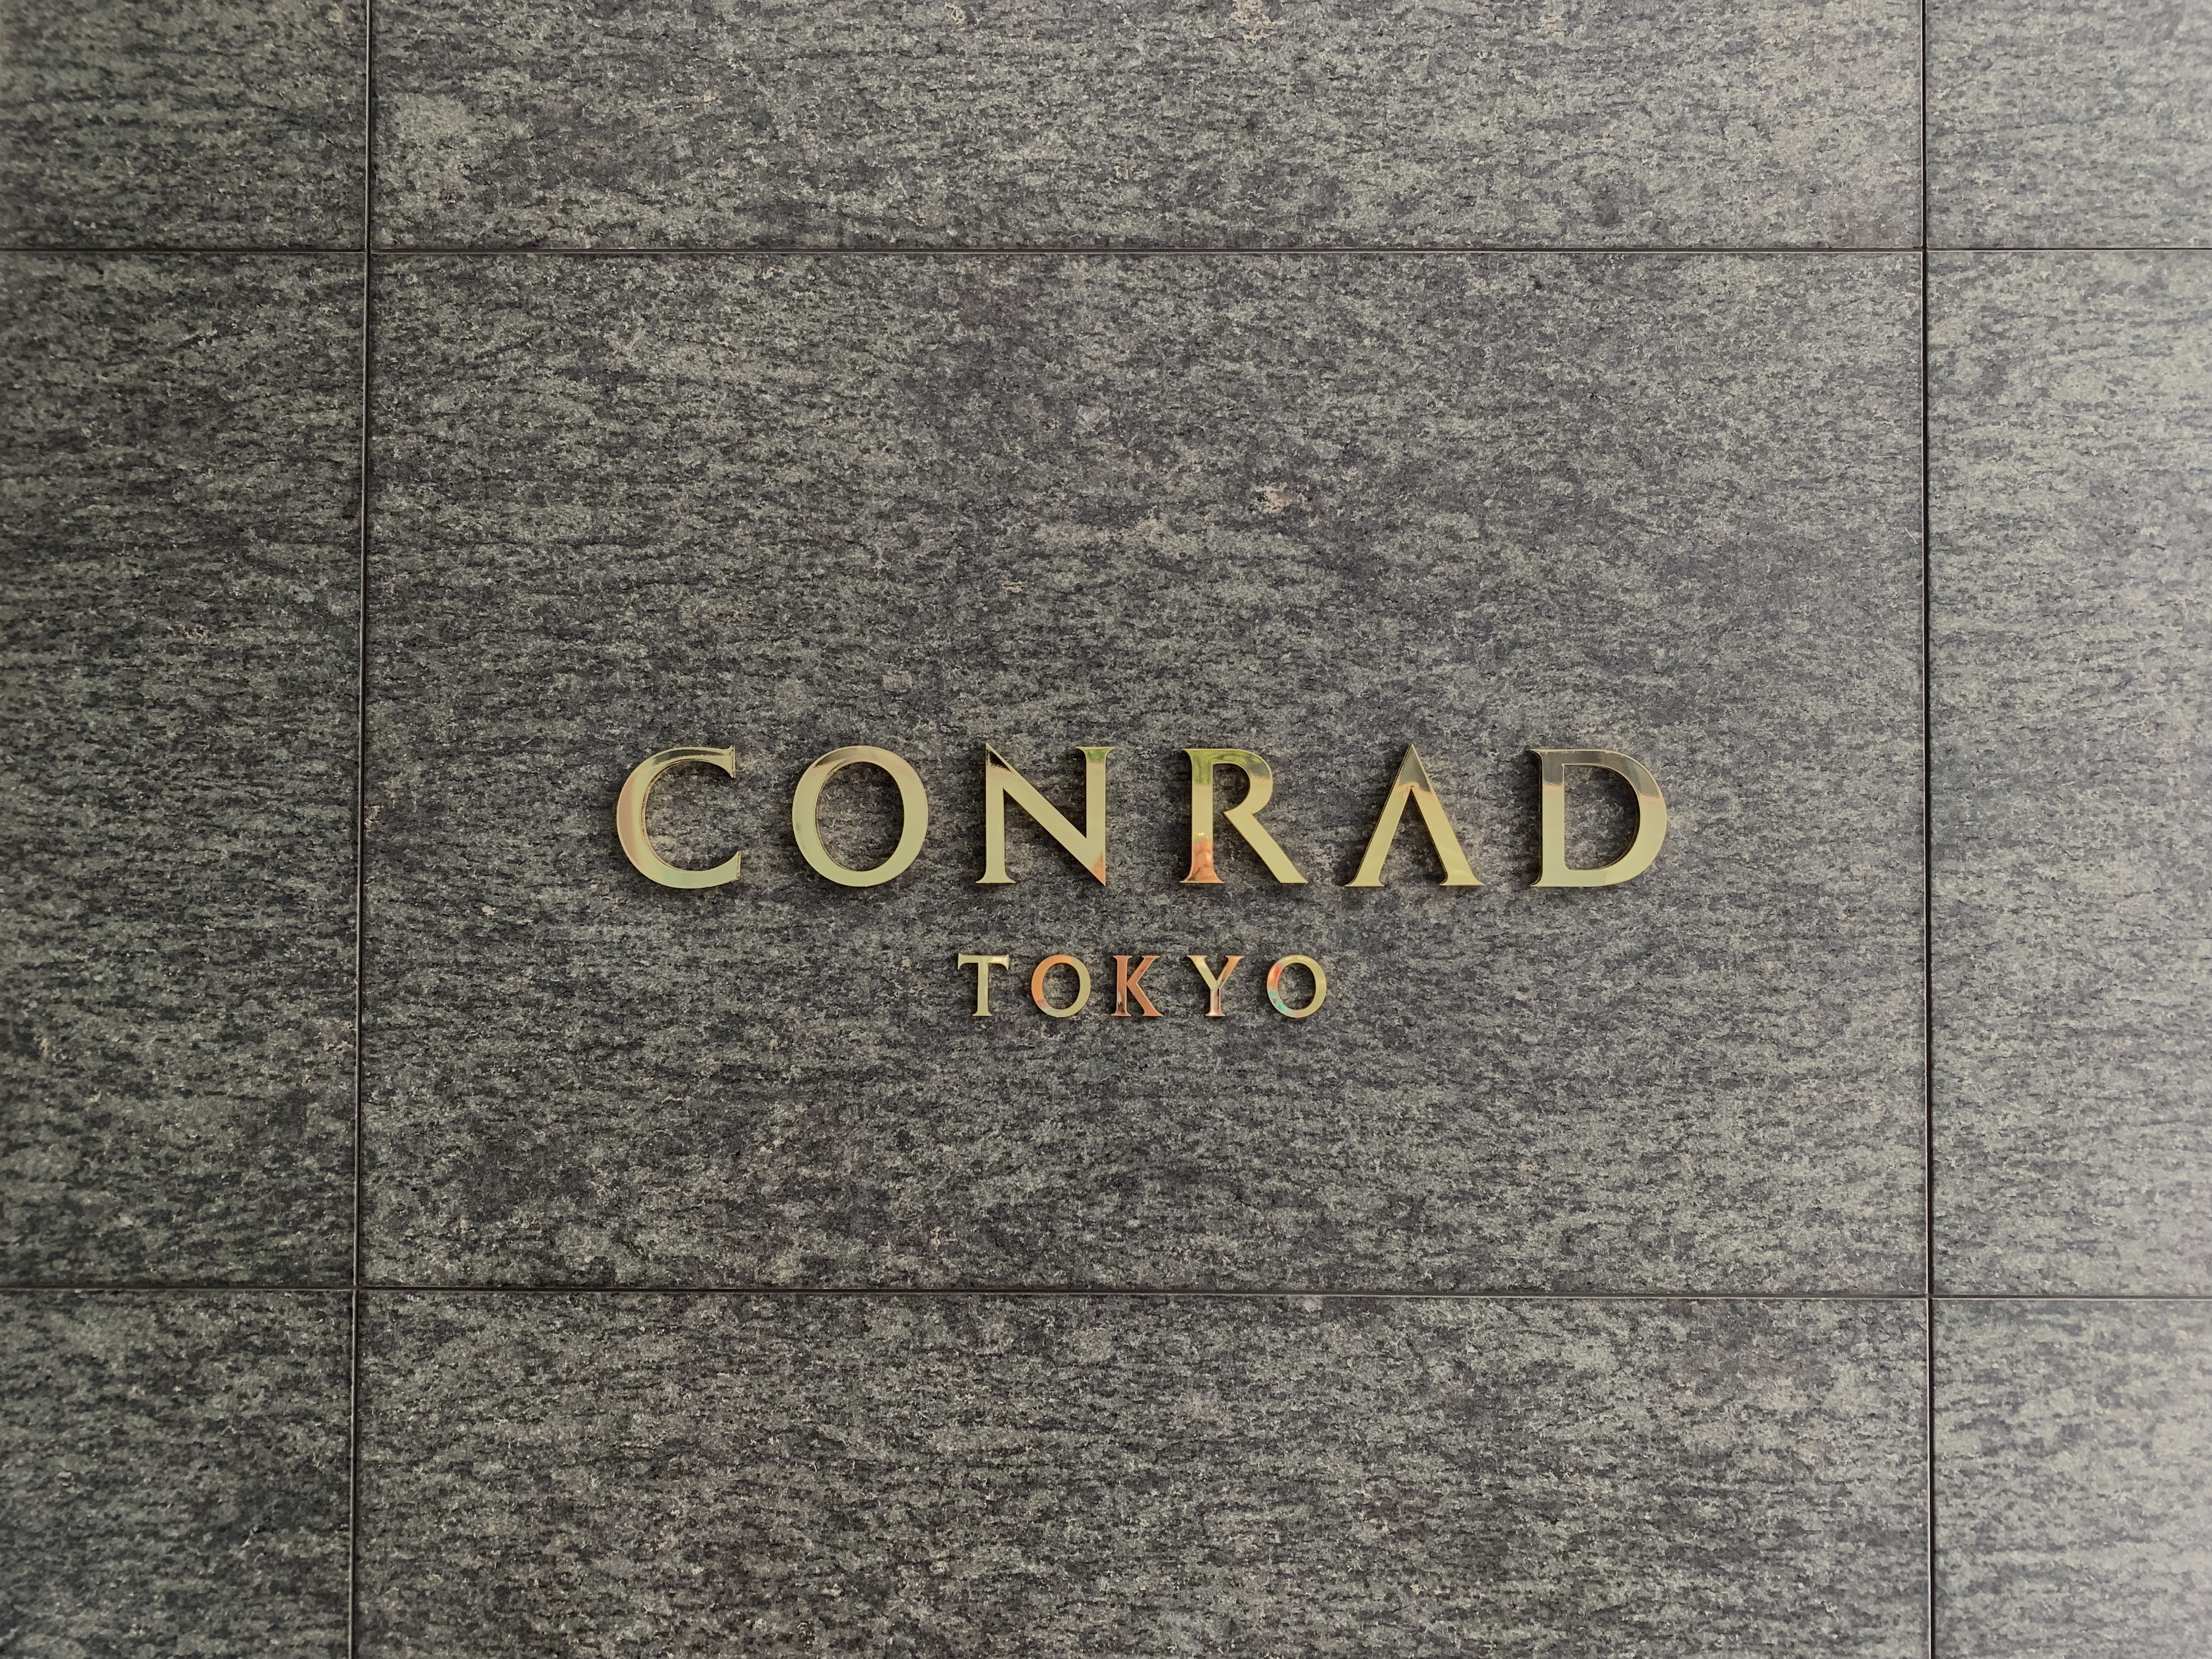 St Regis Osaka & Conrad Tokyo